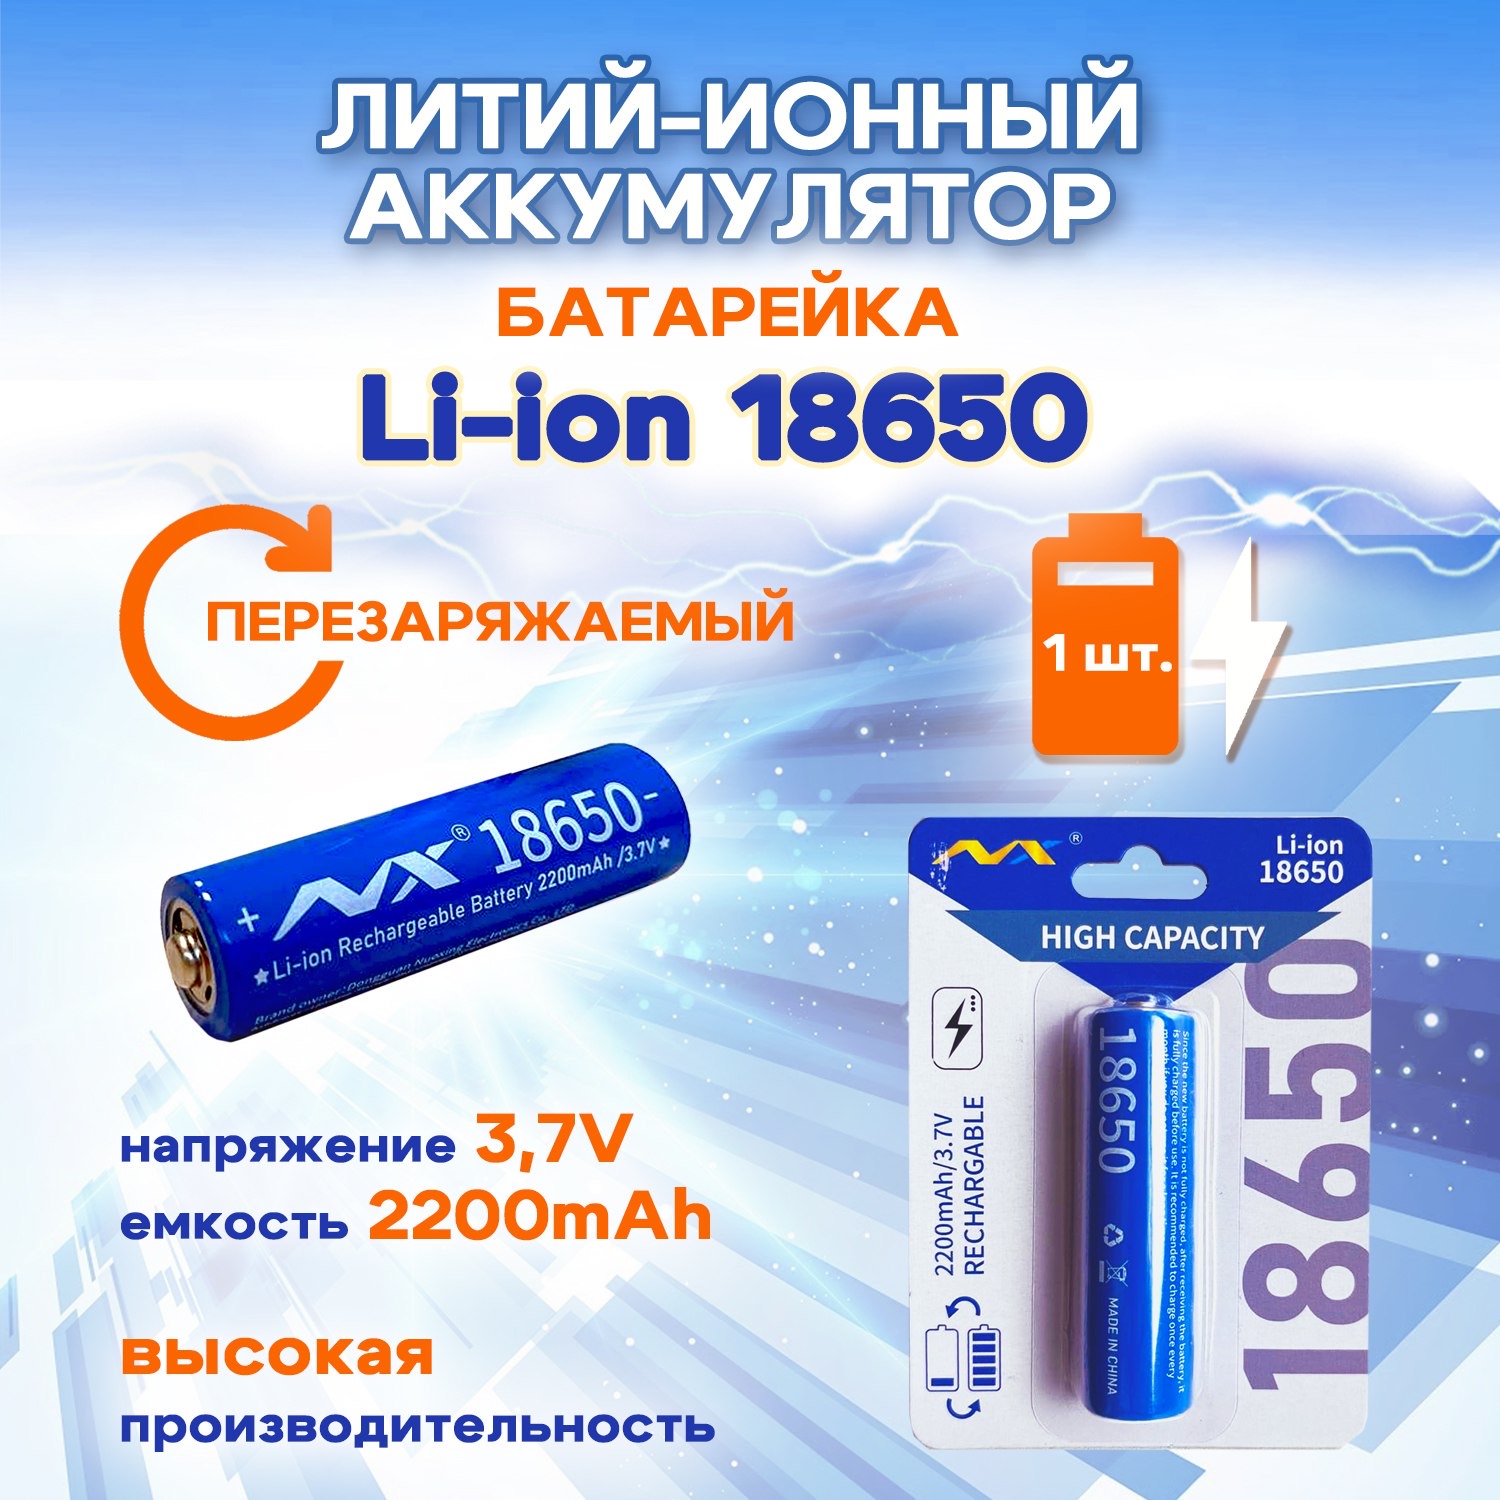 Батарейка-аккумулятор SUPER ENERGY 18650 3,7 В литий-ионный перезаряжаемый 2200 mAh, 1 шт портсигар на 20 сигарет 10 х 9 см